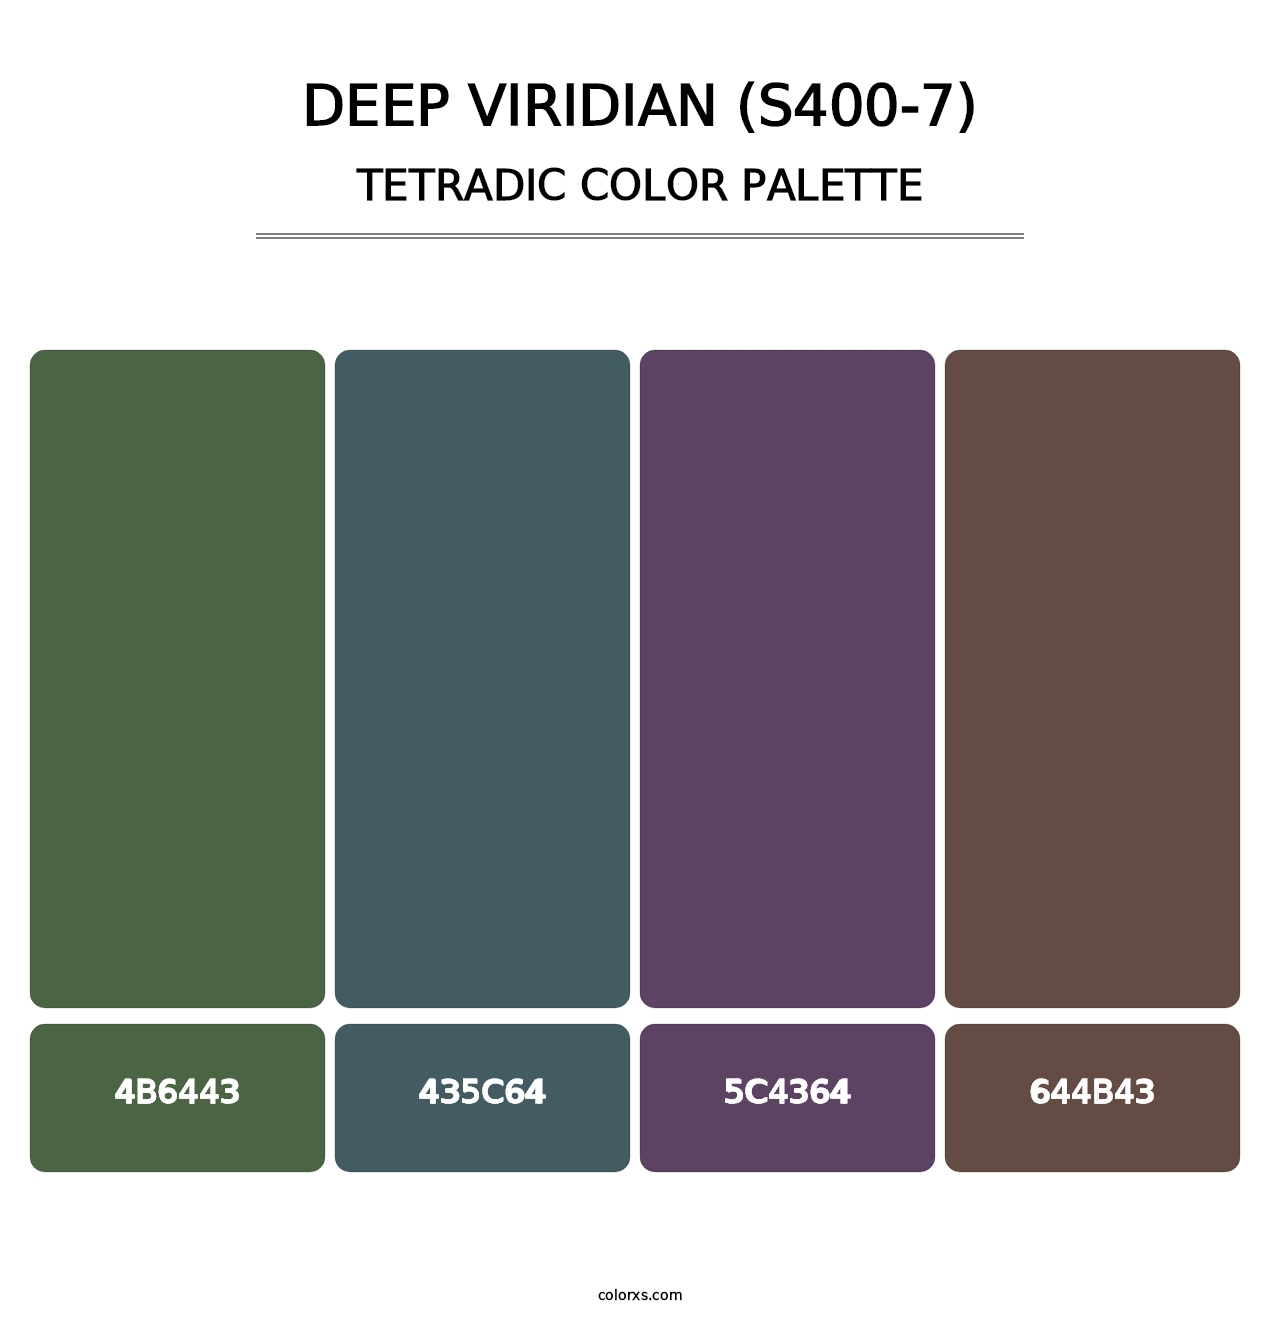 Deep Viridian (S400-7) - Tetradic Color Palette